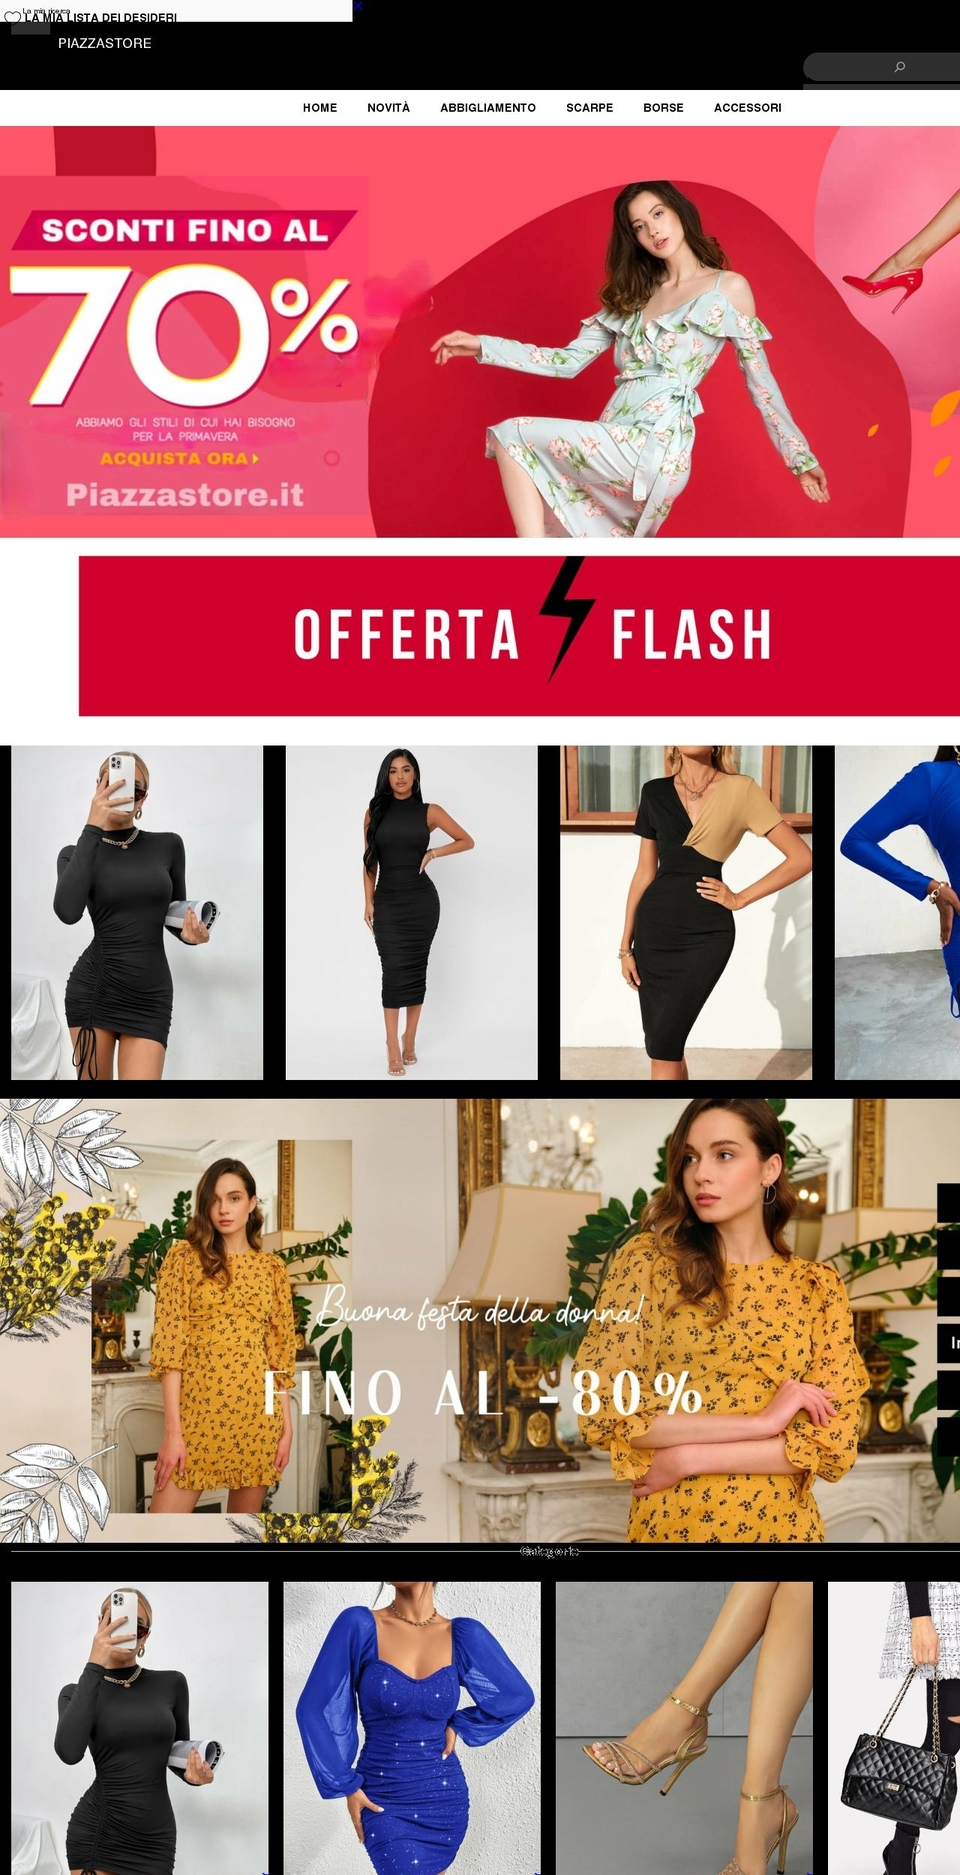 piazzastore.it shopify website screenshot